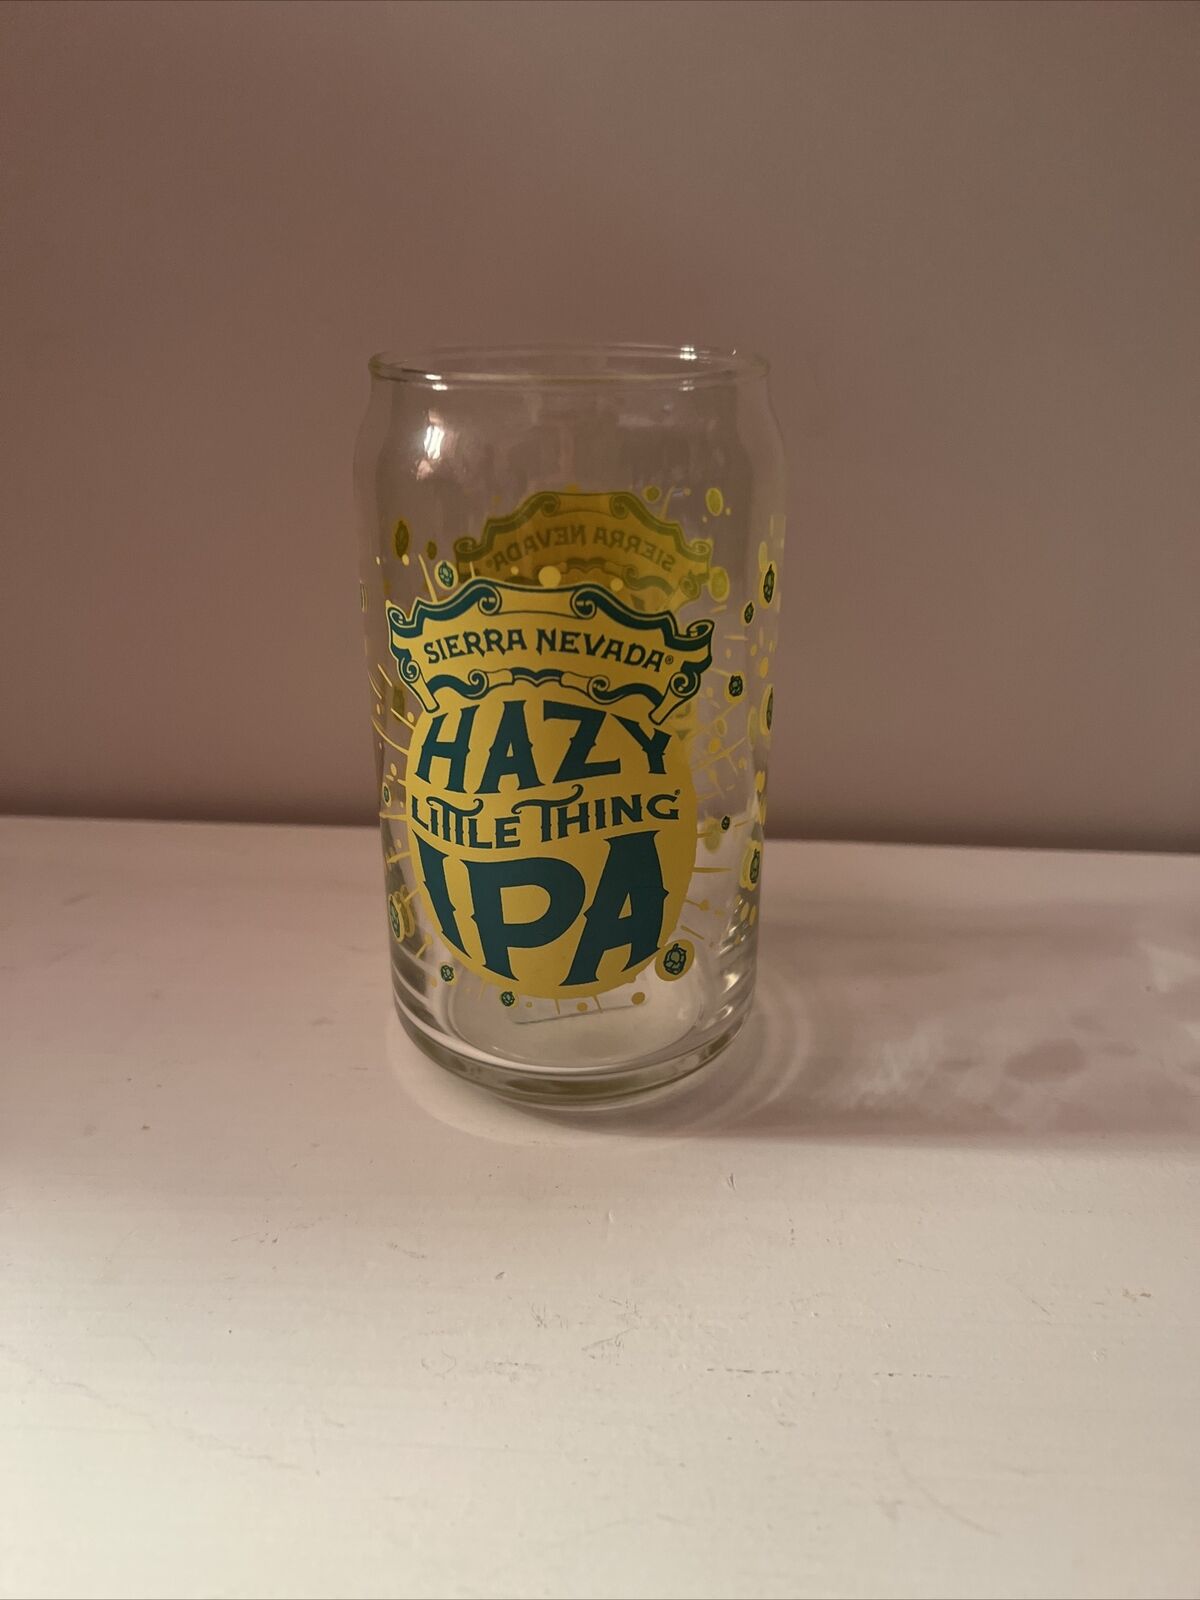 Sierra Nevada Hazy Little Thing IPA 12oz Beer Glass